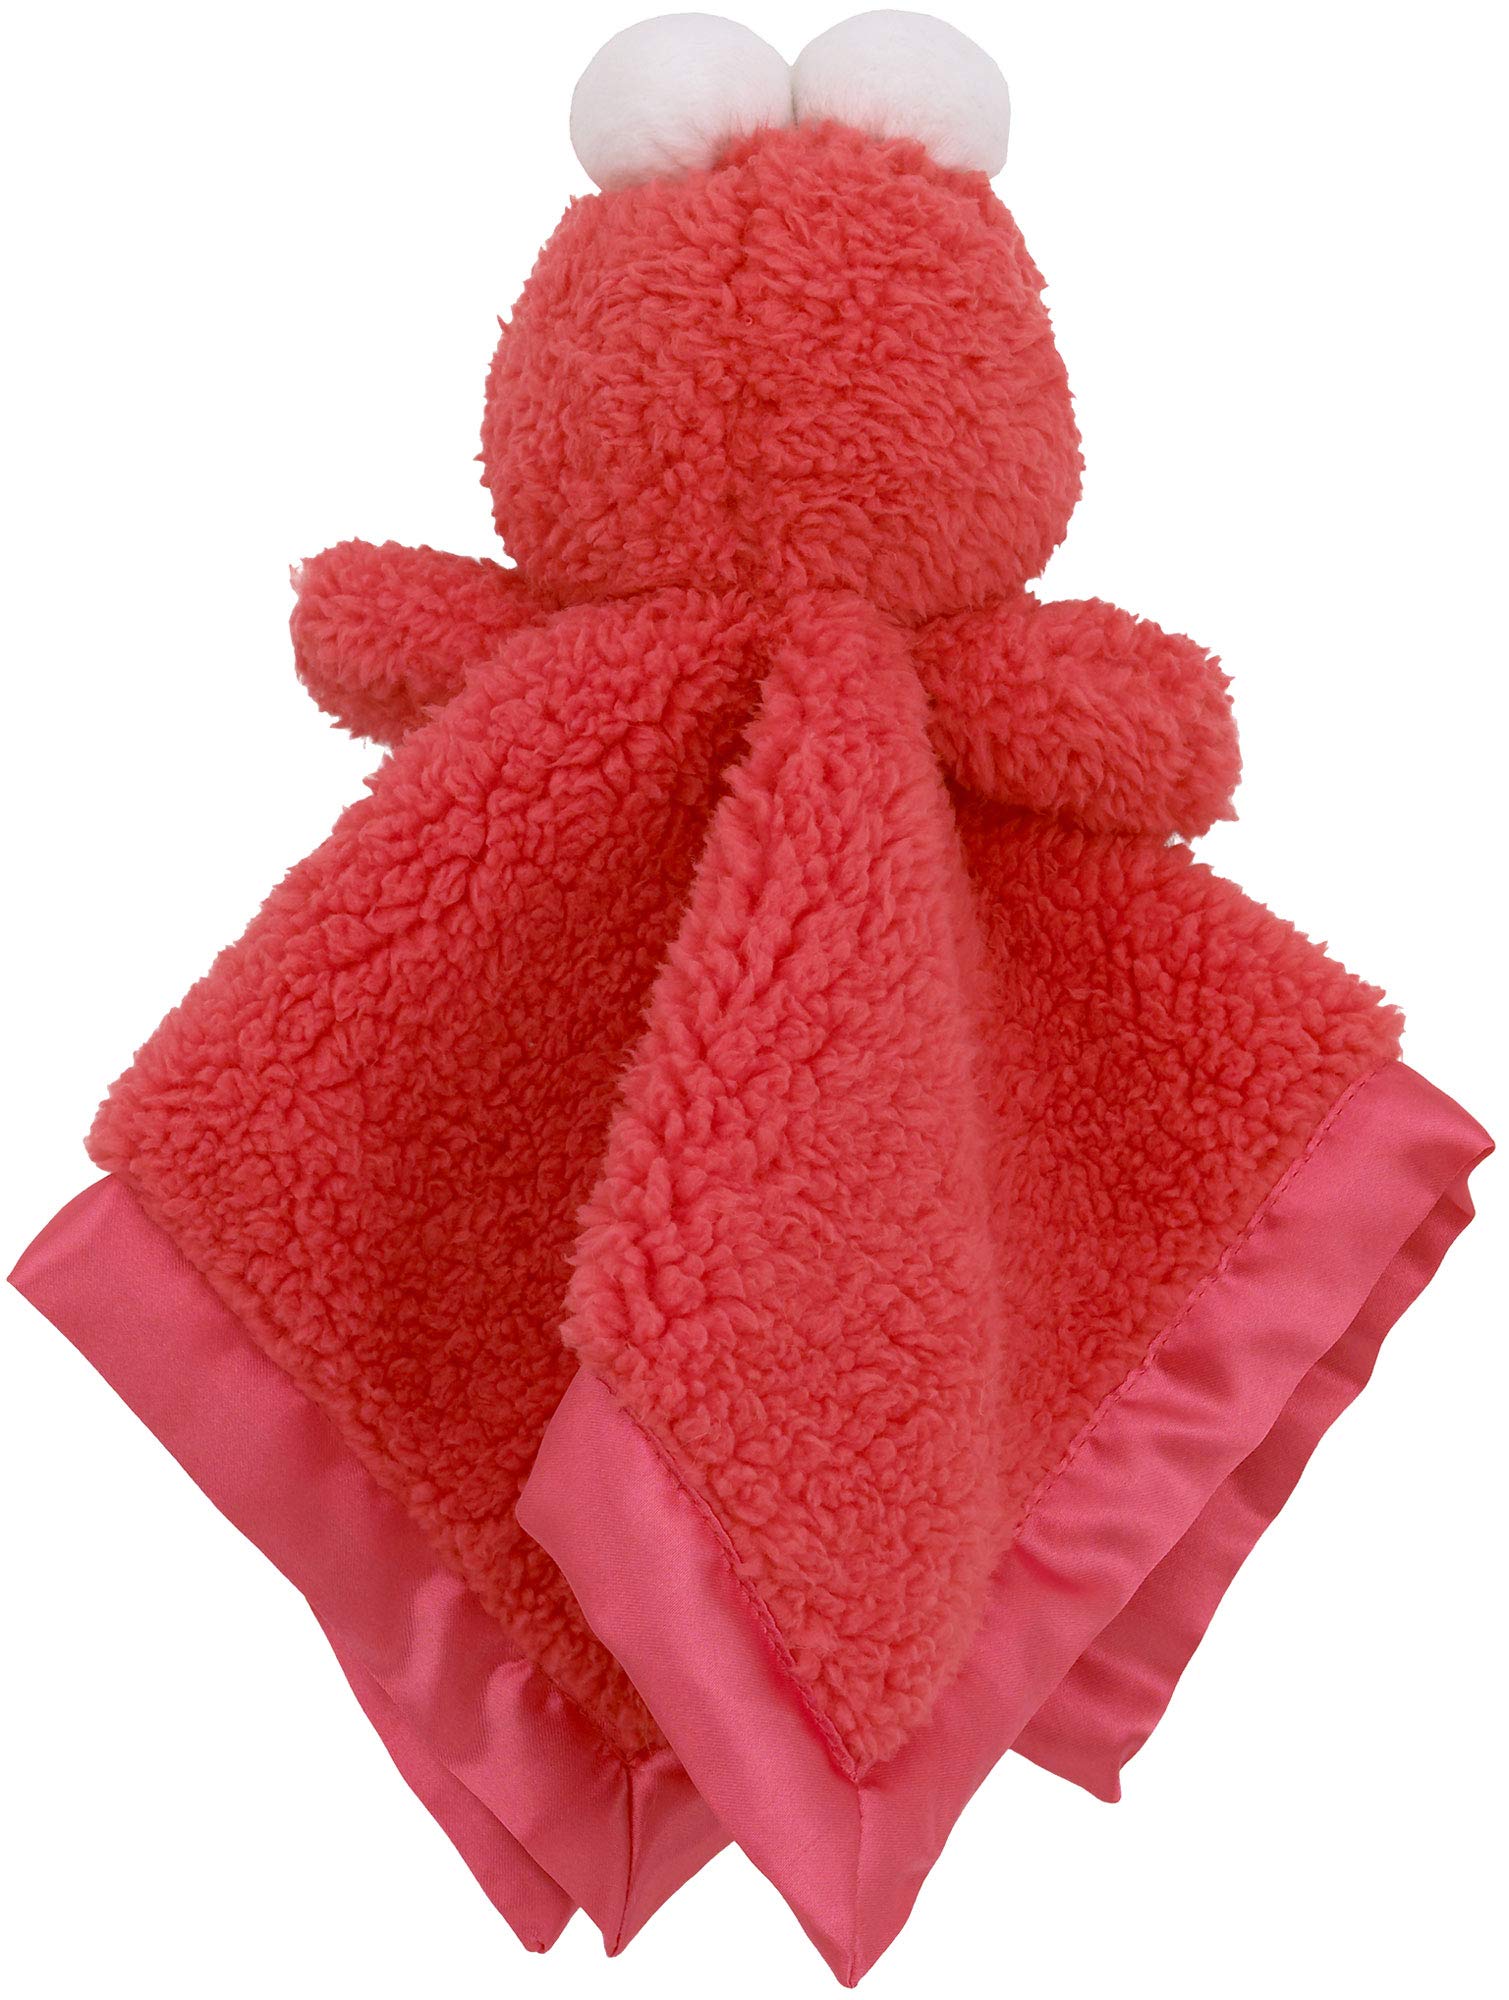 Sesame Street Elmo Baby Security Blanket